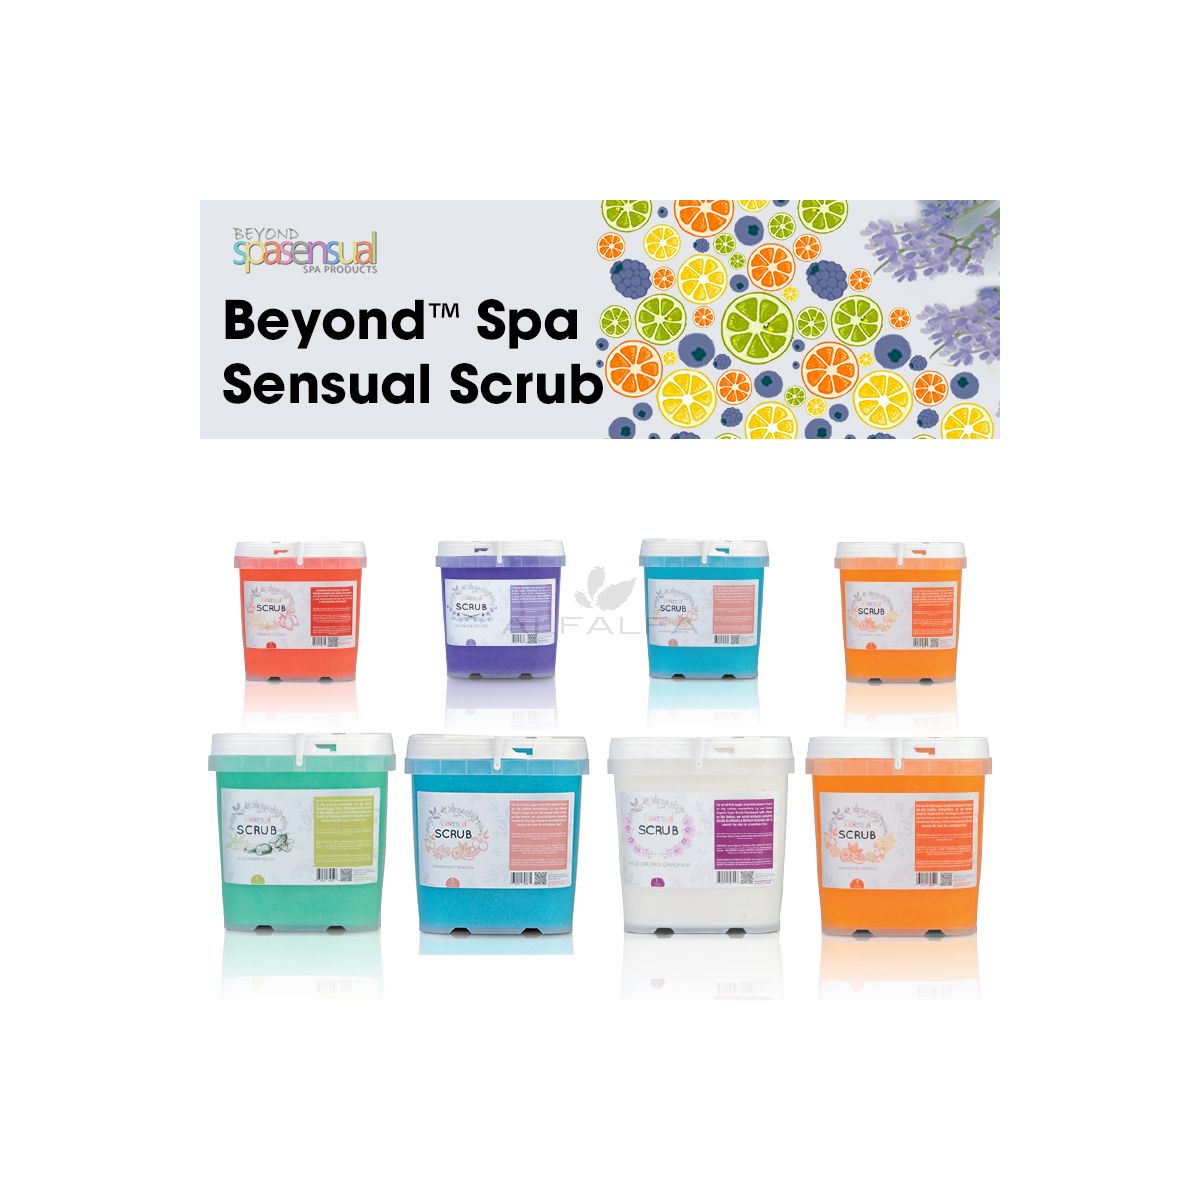 Beyond Spa Sensual Scrub